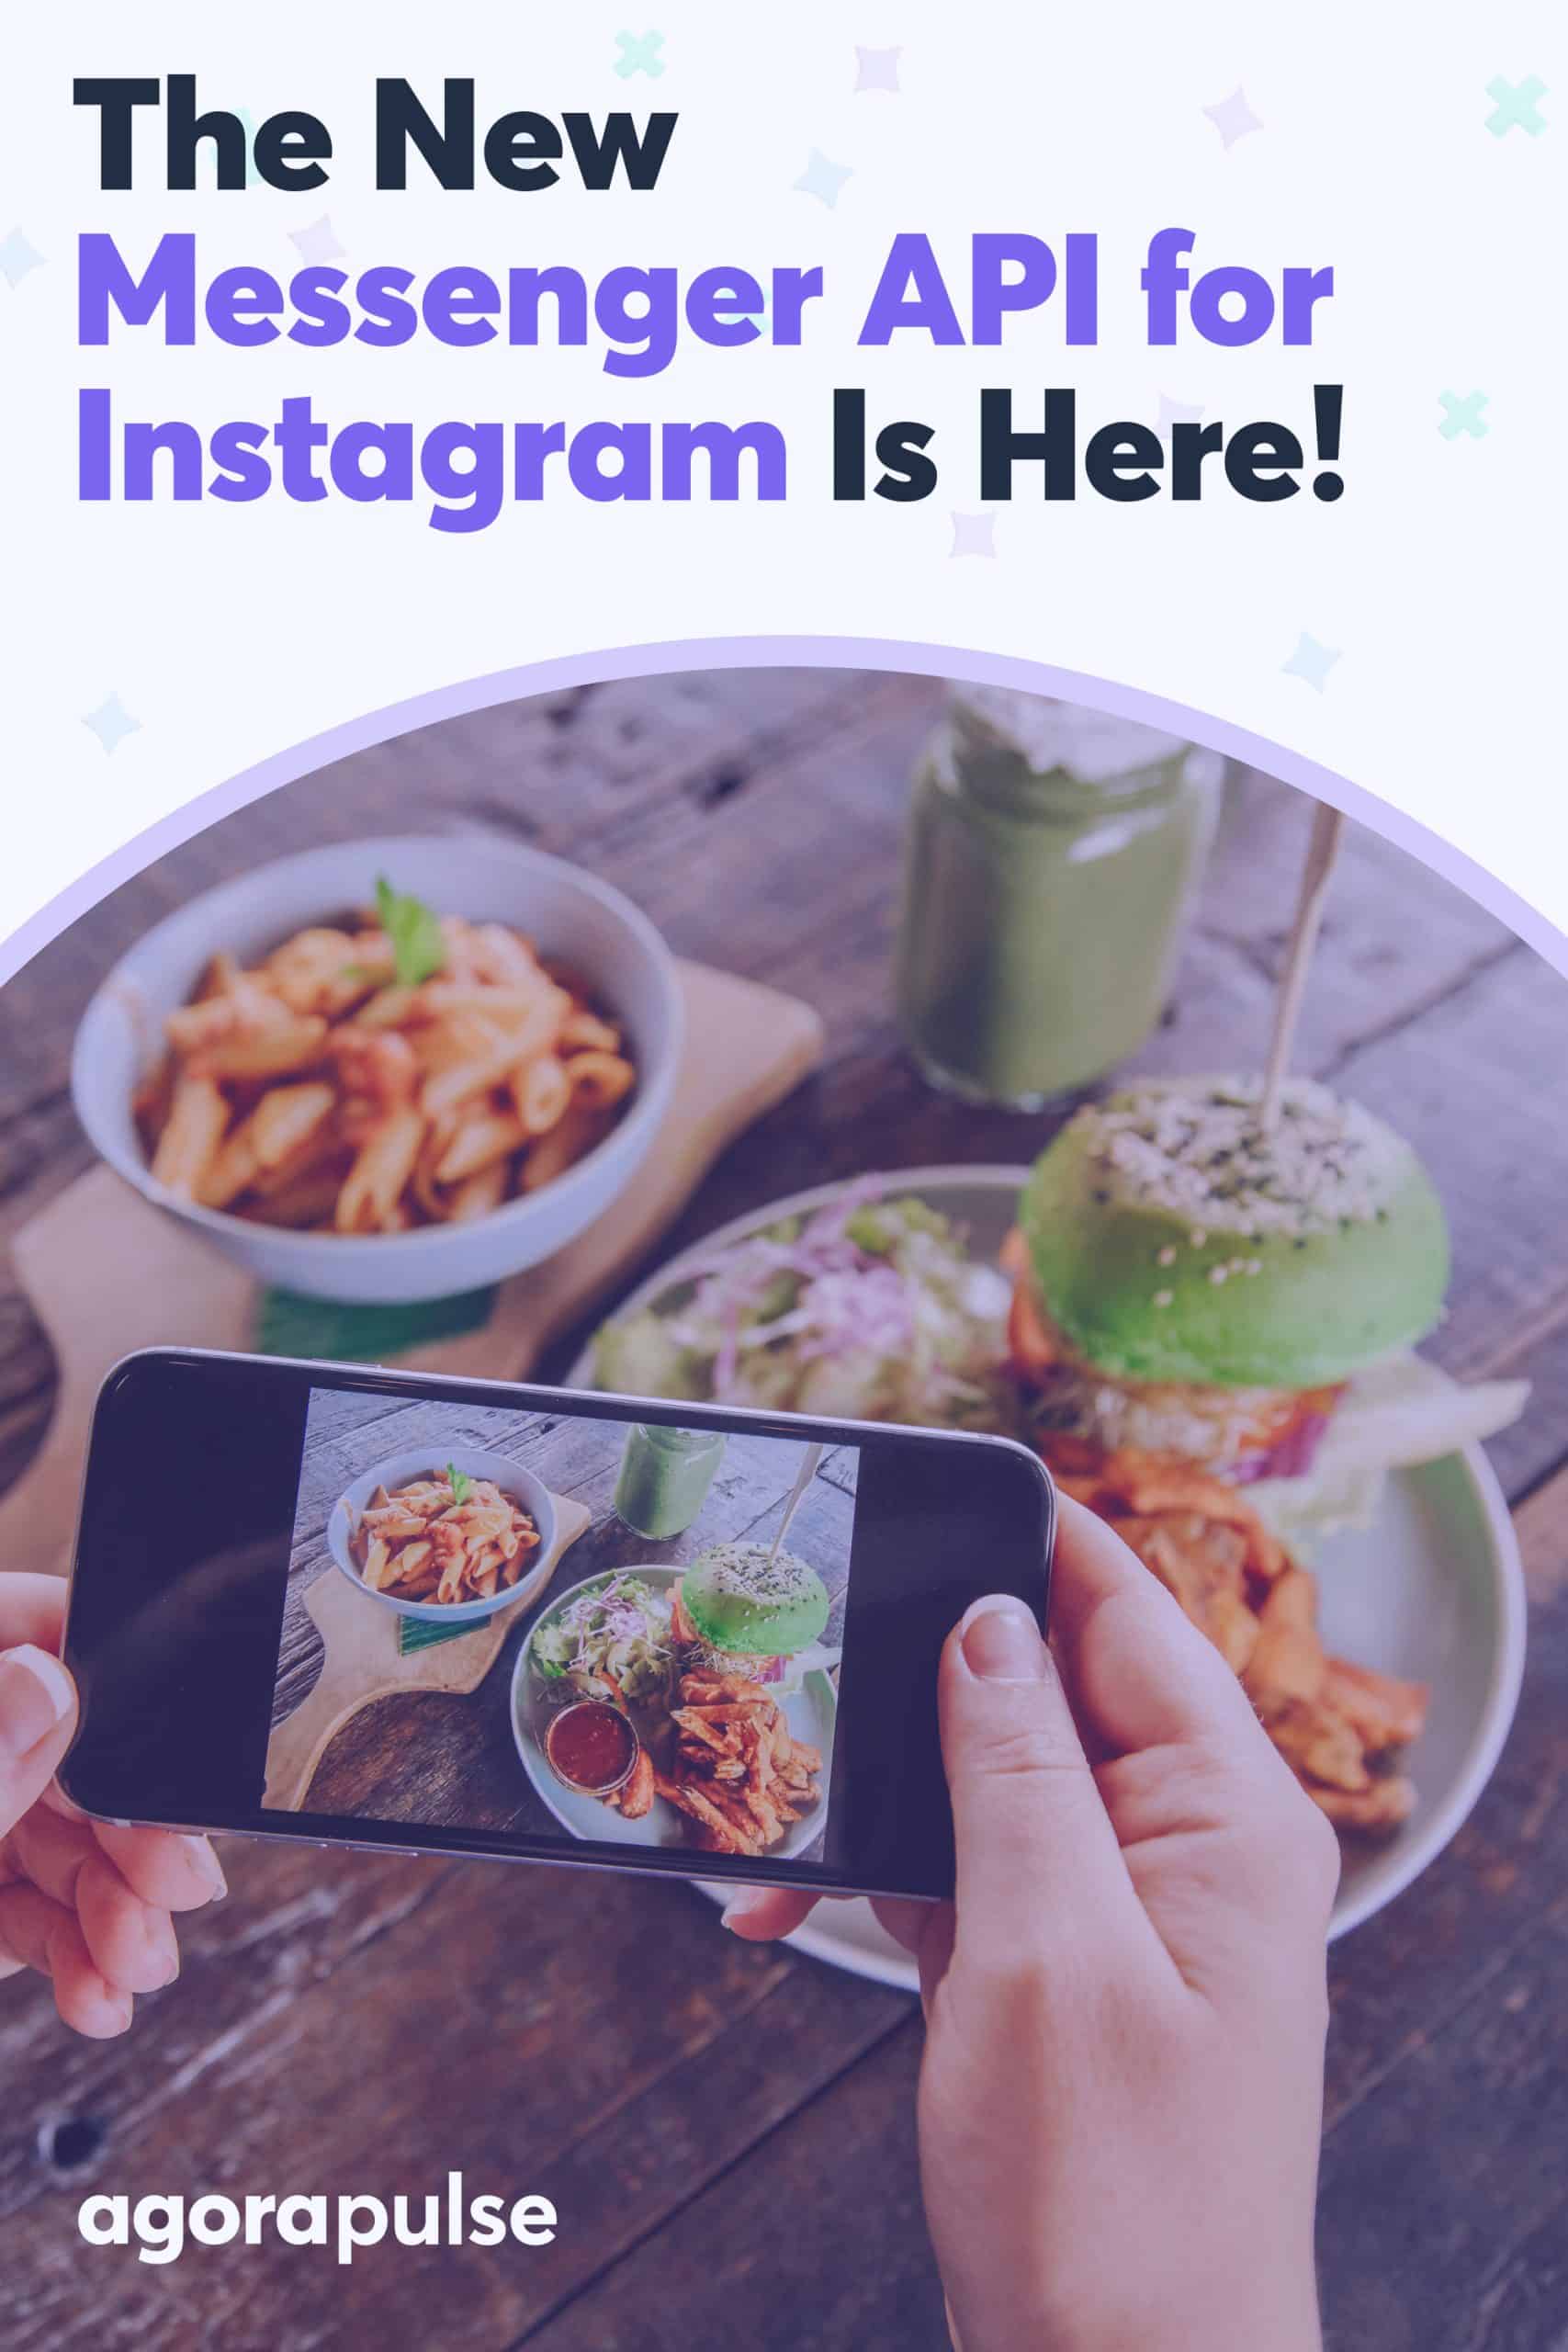 The New Messenger API for Instagram Is Here!